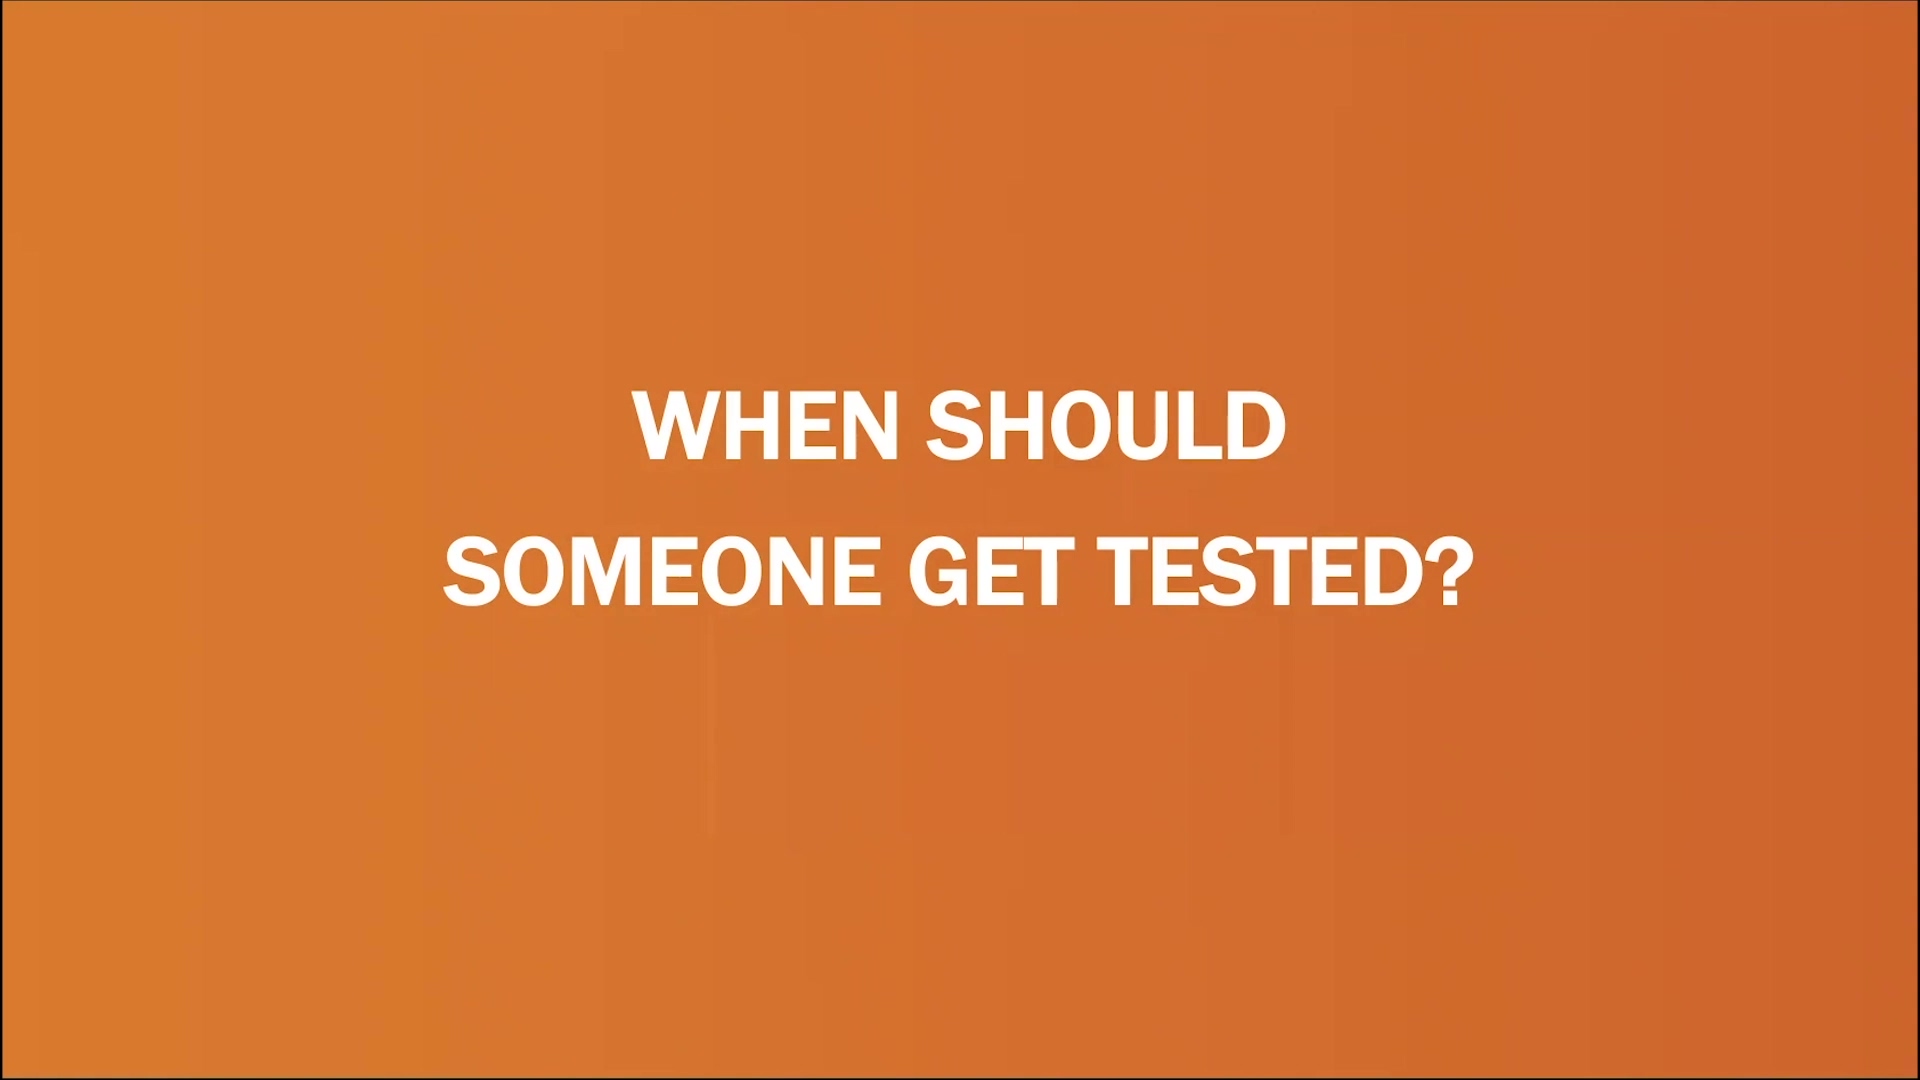 Coronavirus_webinar_recap_when should someone get tested-thumb